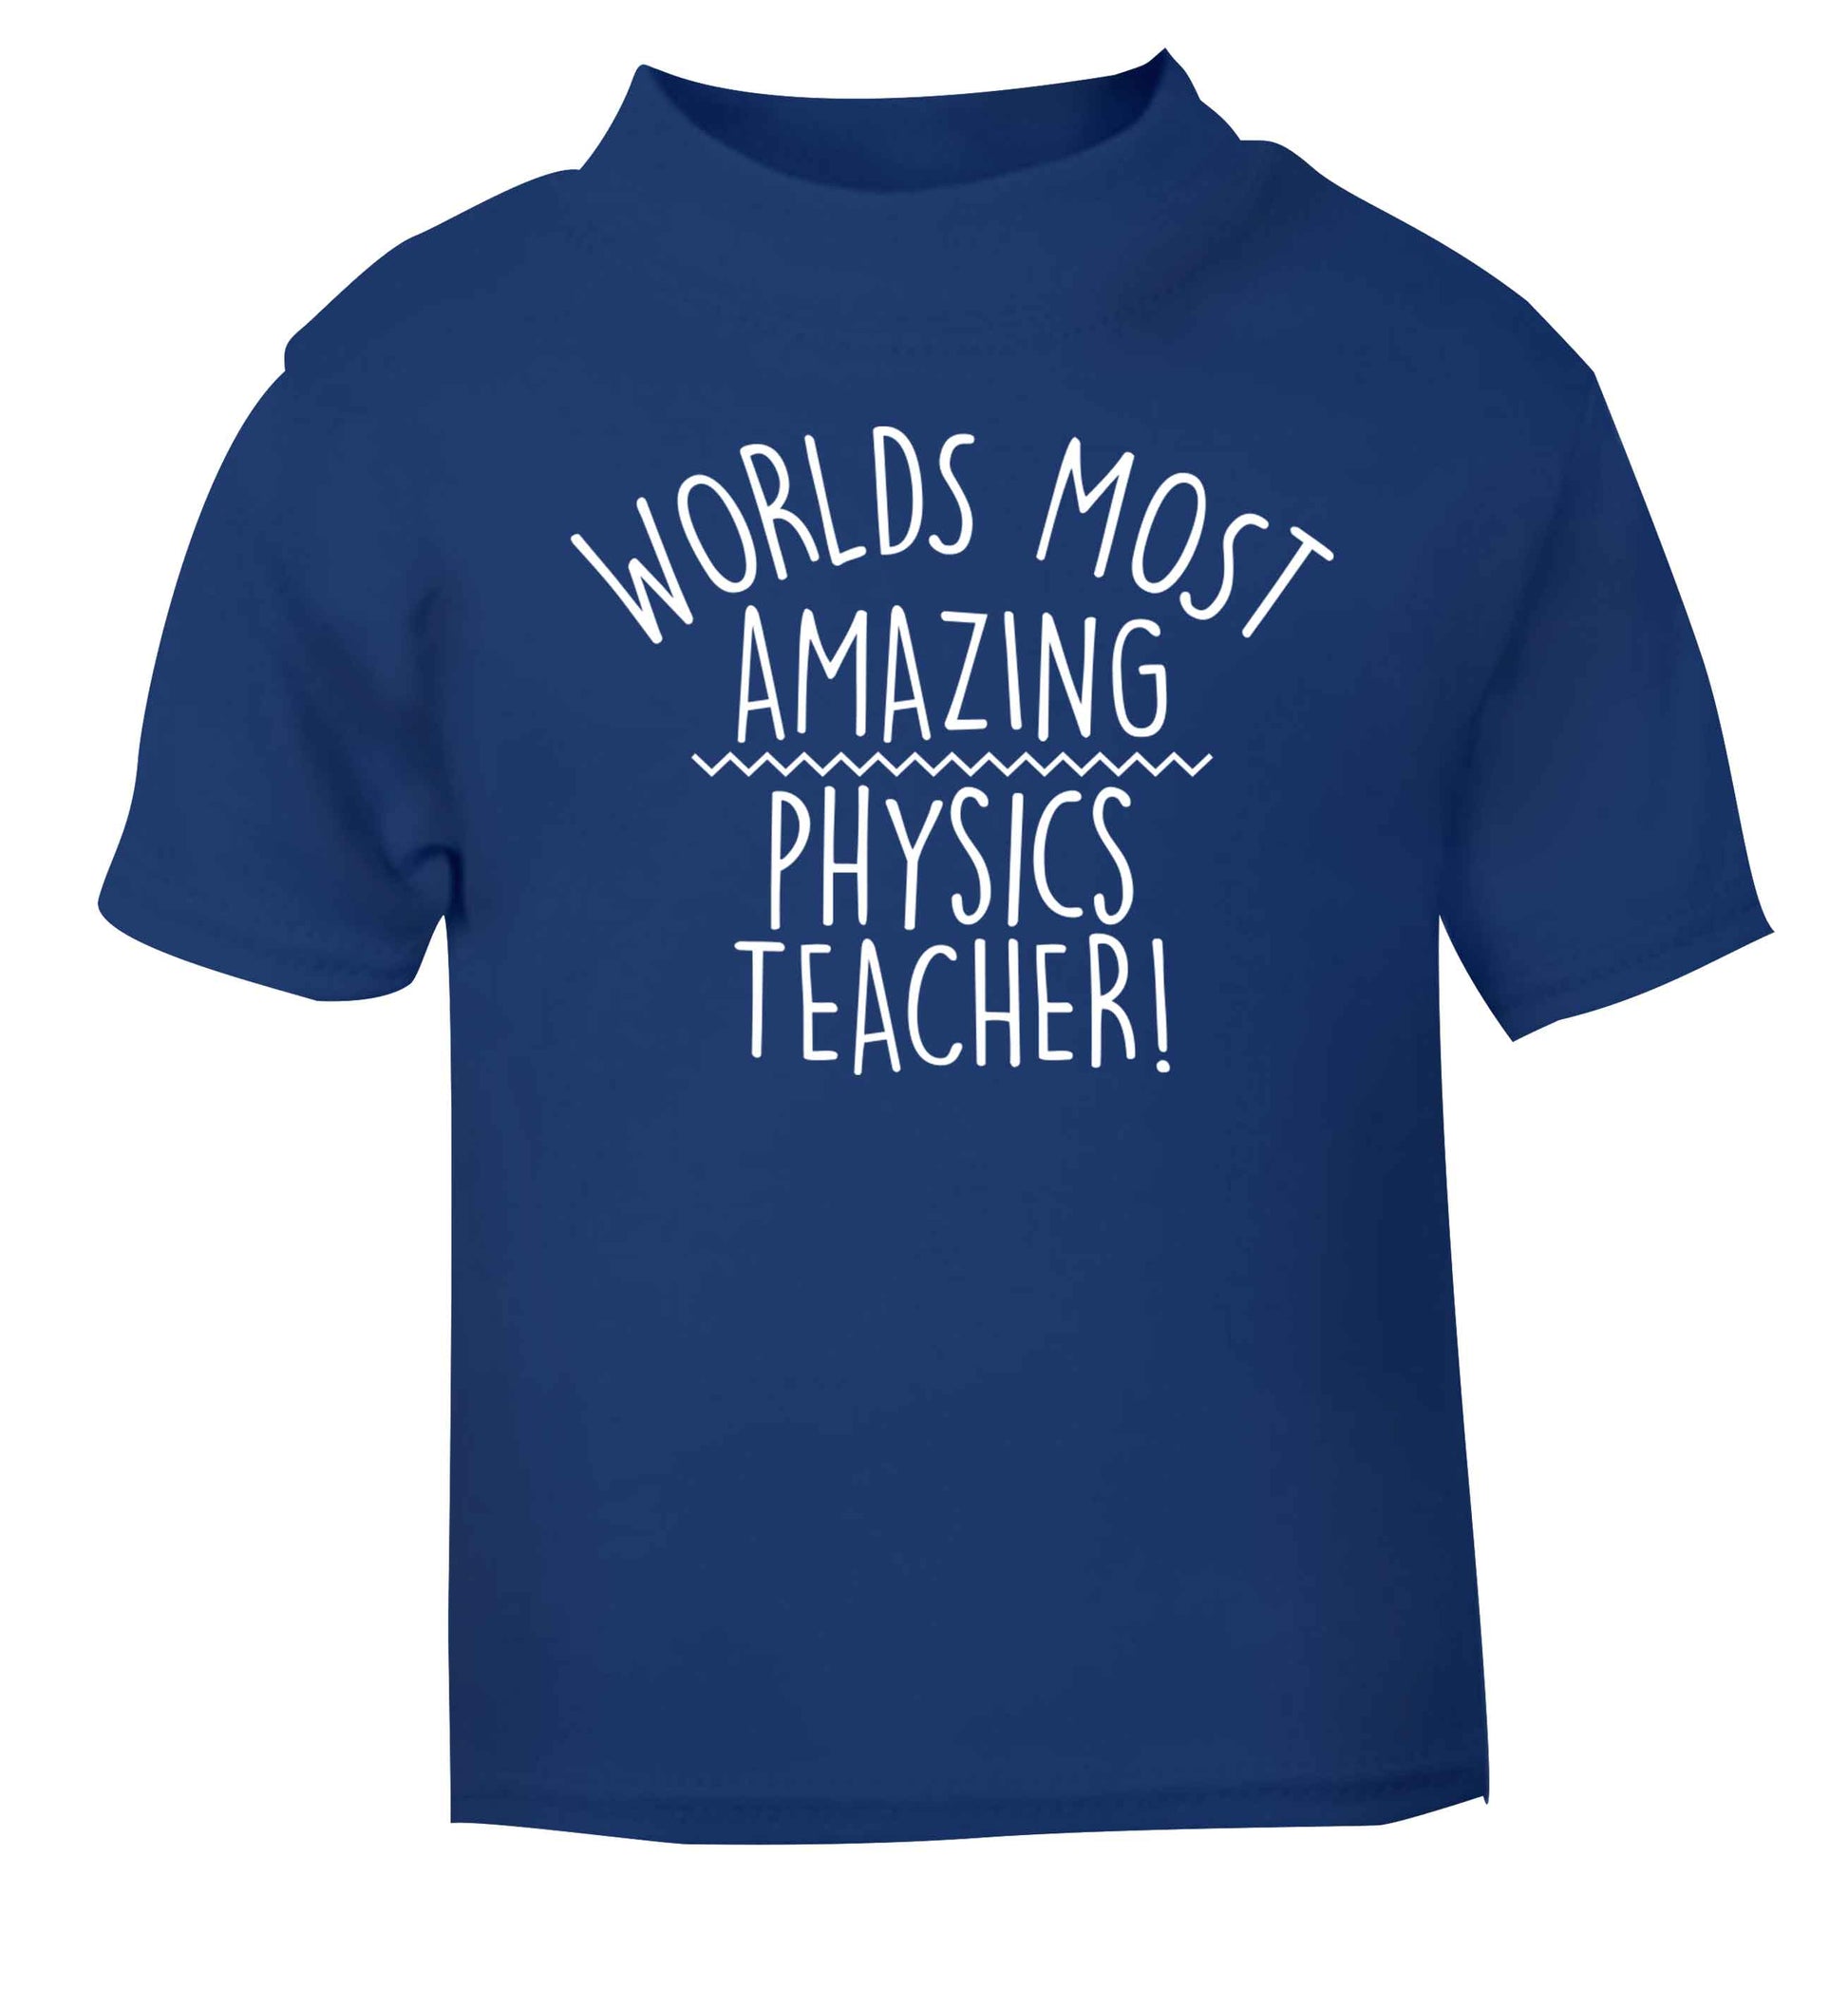 Worlds most amazing physics teacher blue baby toddler Tshirt 2 Years